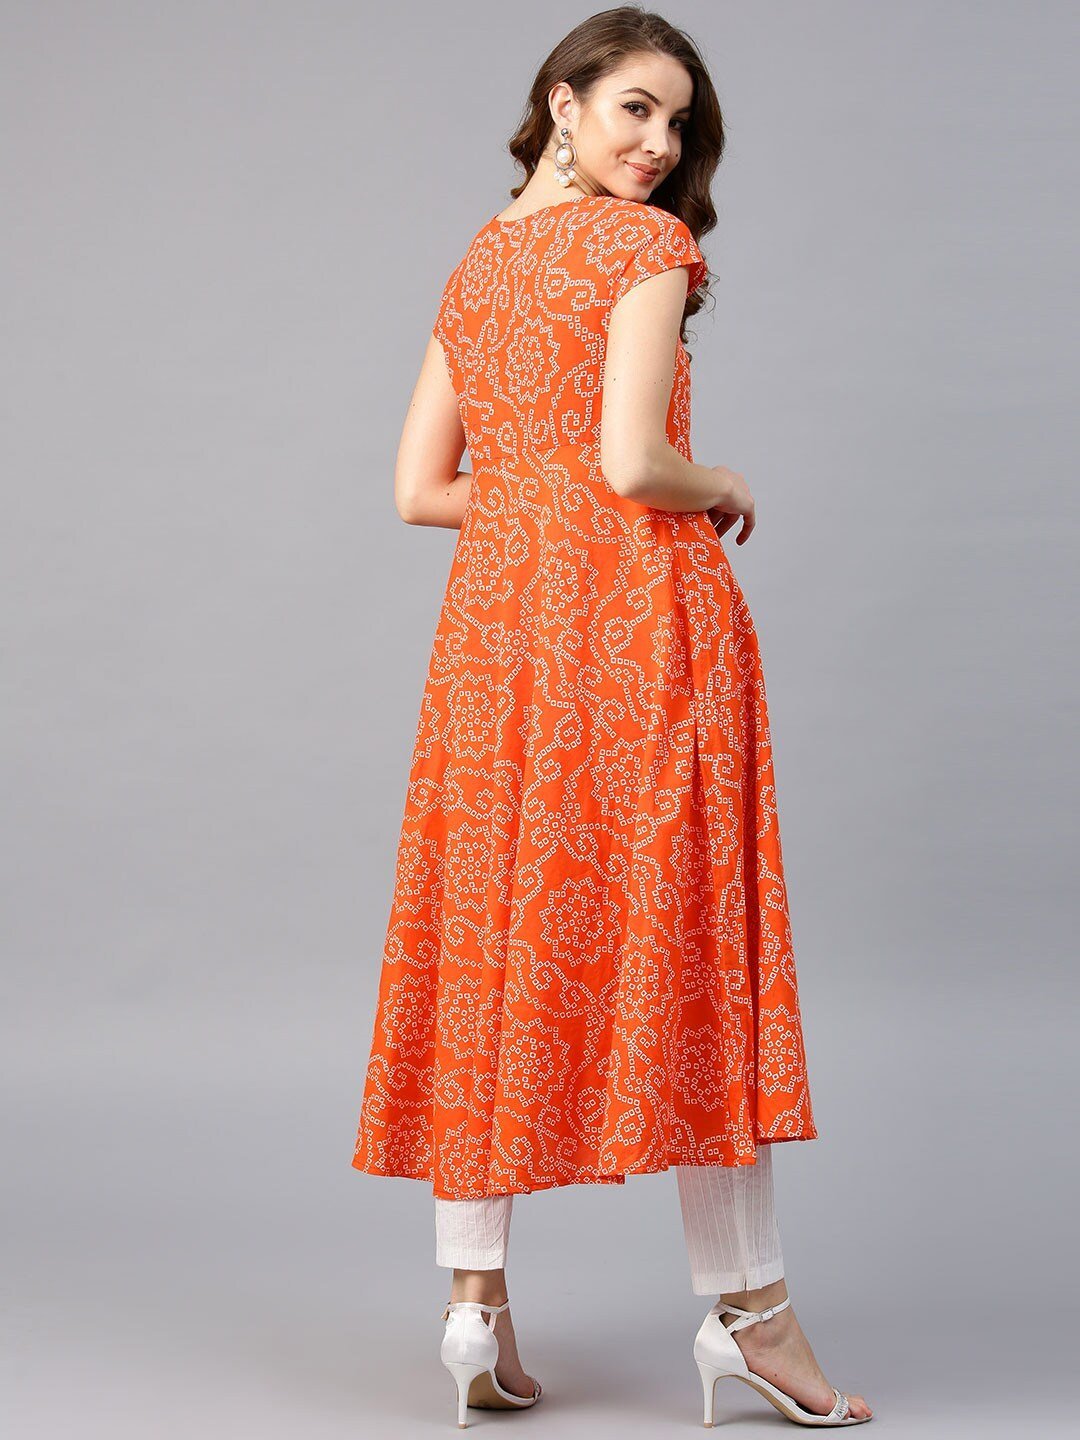 Women's  Orange & White Printed Anarkali Kurta - AKS